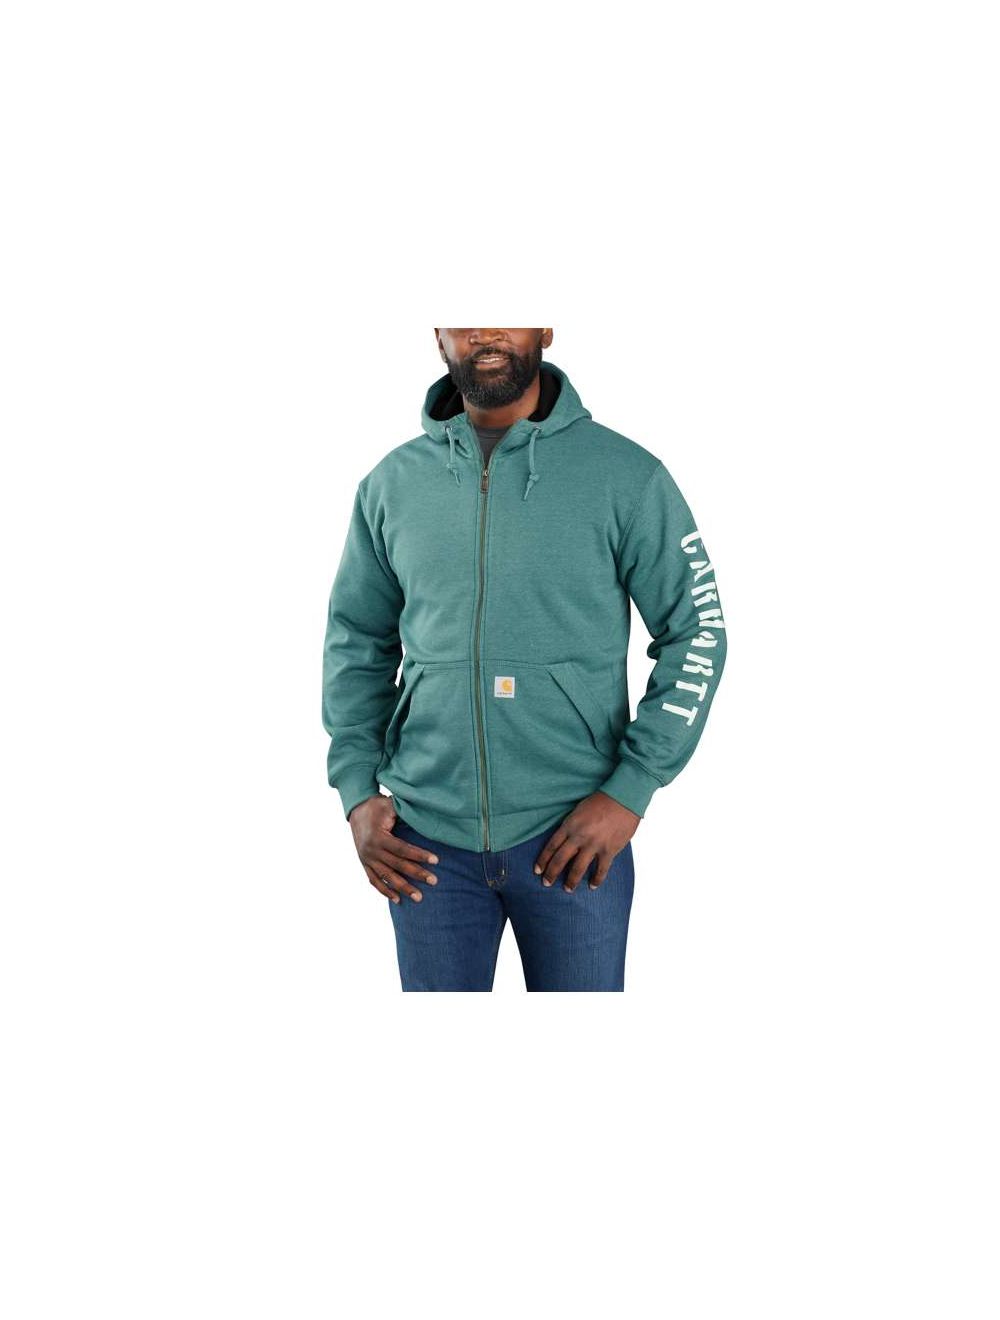 Carhartt Men's Medium Peat Cotton/Polyester Rain Defender Original Fleece  Lined Graphic Sweatshirt 104637-306 - The Home Depot